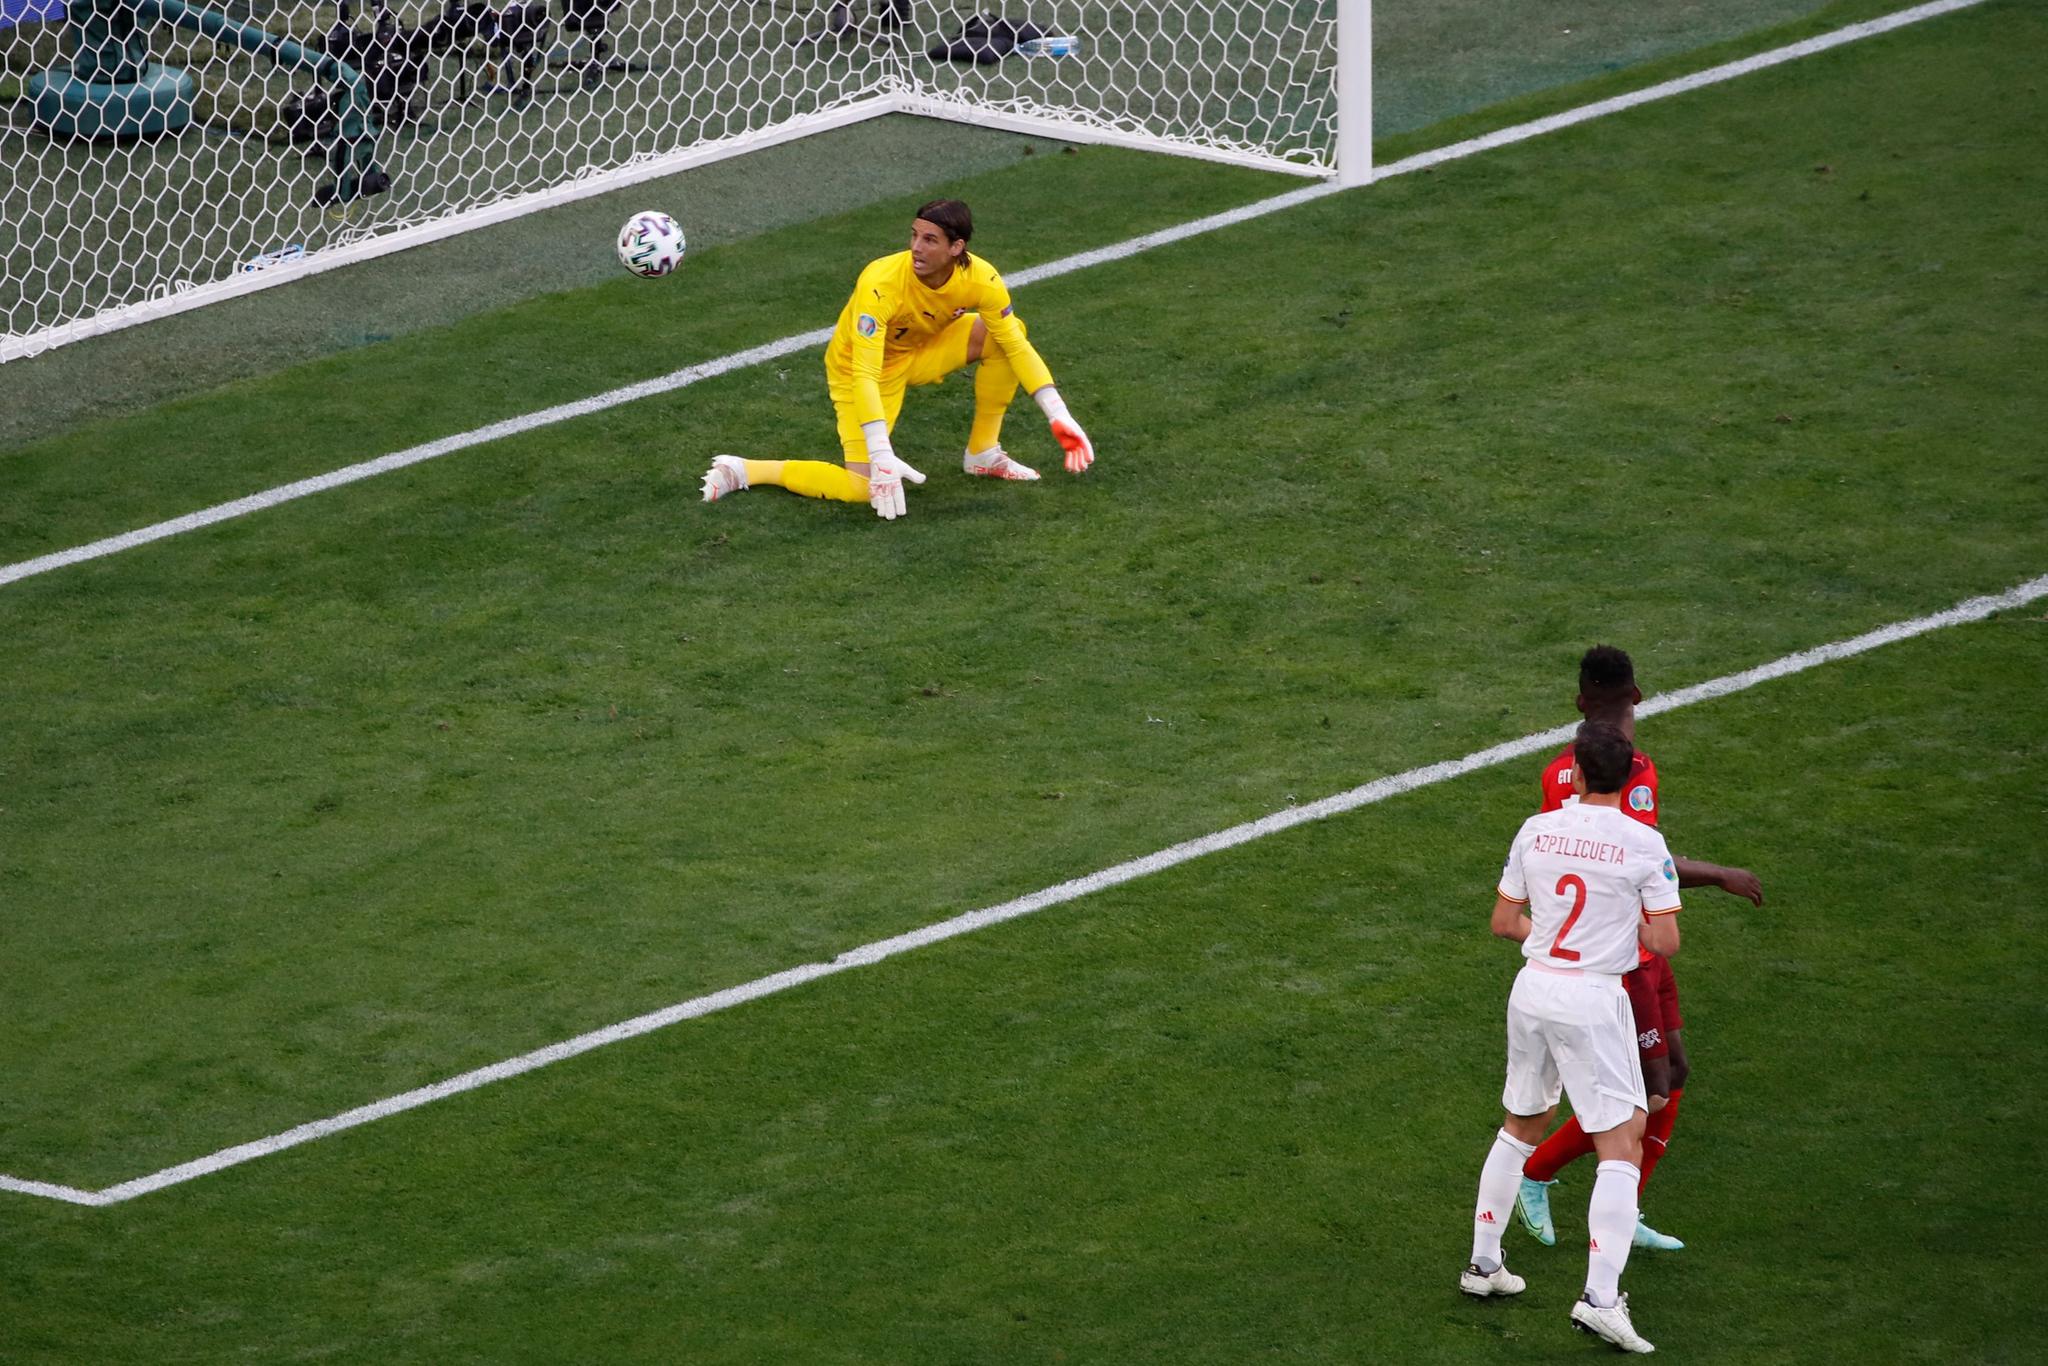 Sveits målvakt Yann Sommer ser ballen passere i kvartfinalen mot Spania.